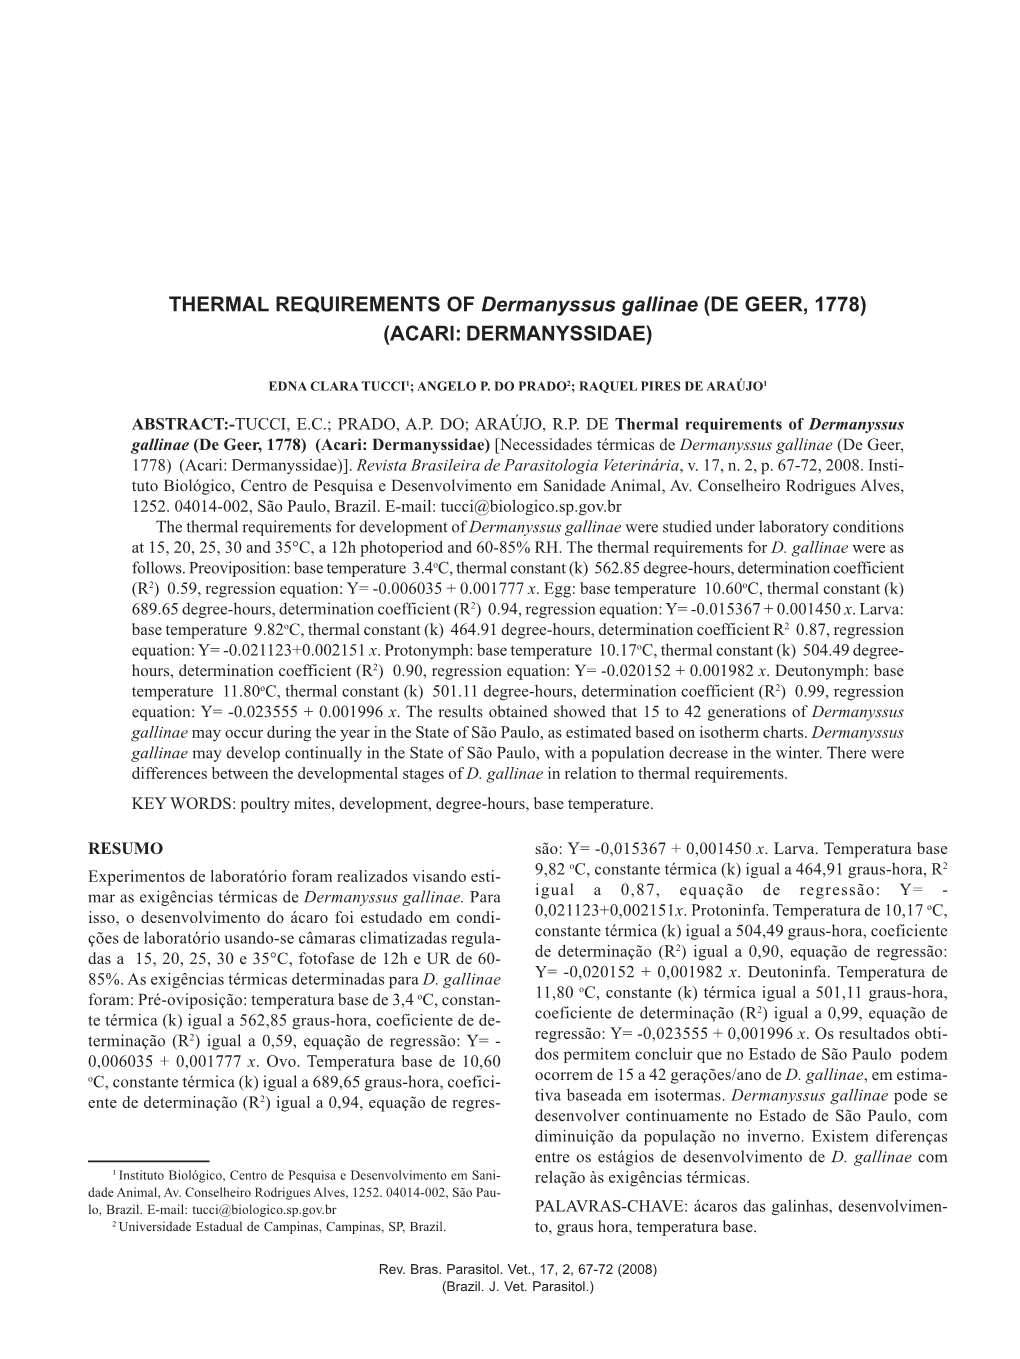 THERMAL REQUIREMENTS of Dermanyssus Gallinae (DE GEER, 1778) (ACARI: DERMANYSSIDAE)